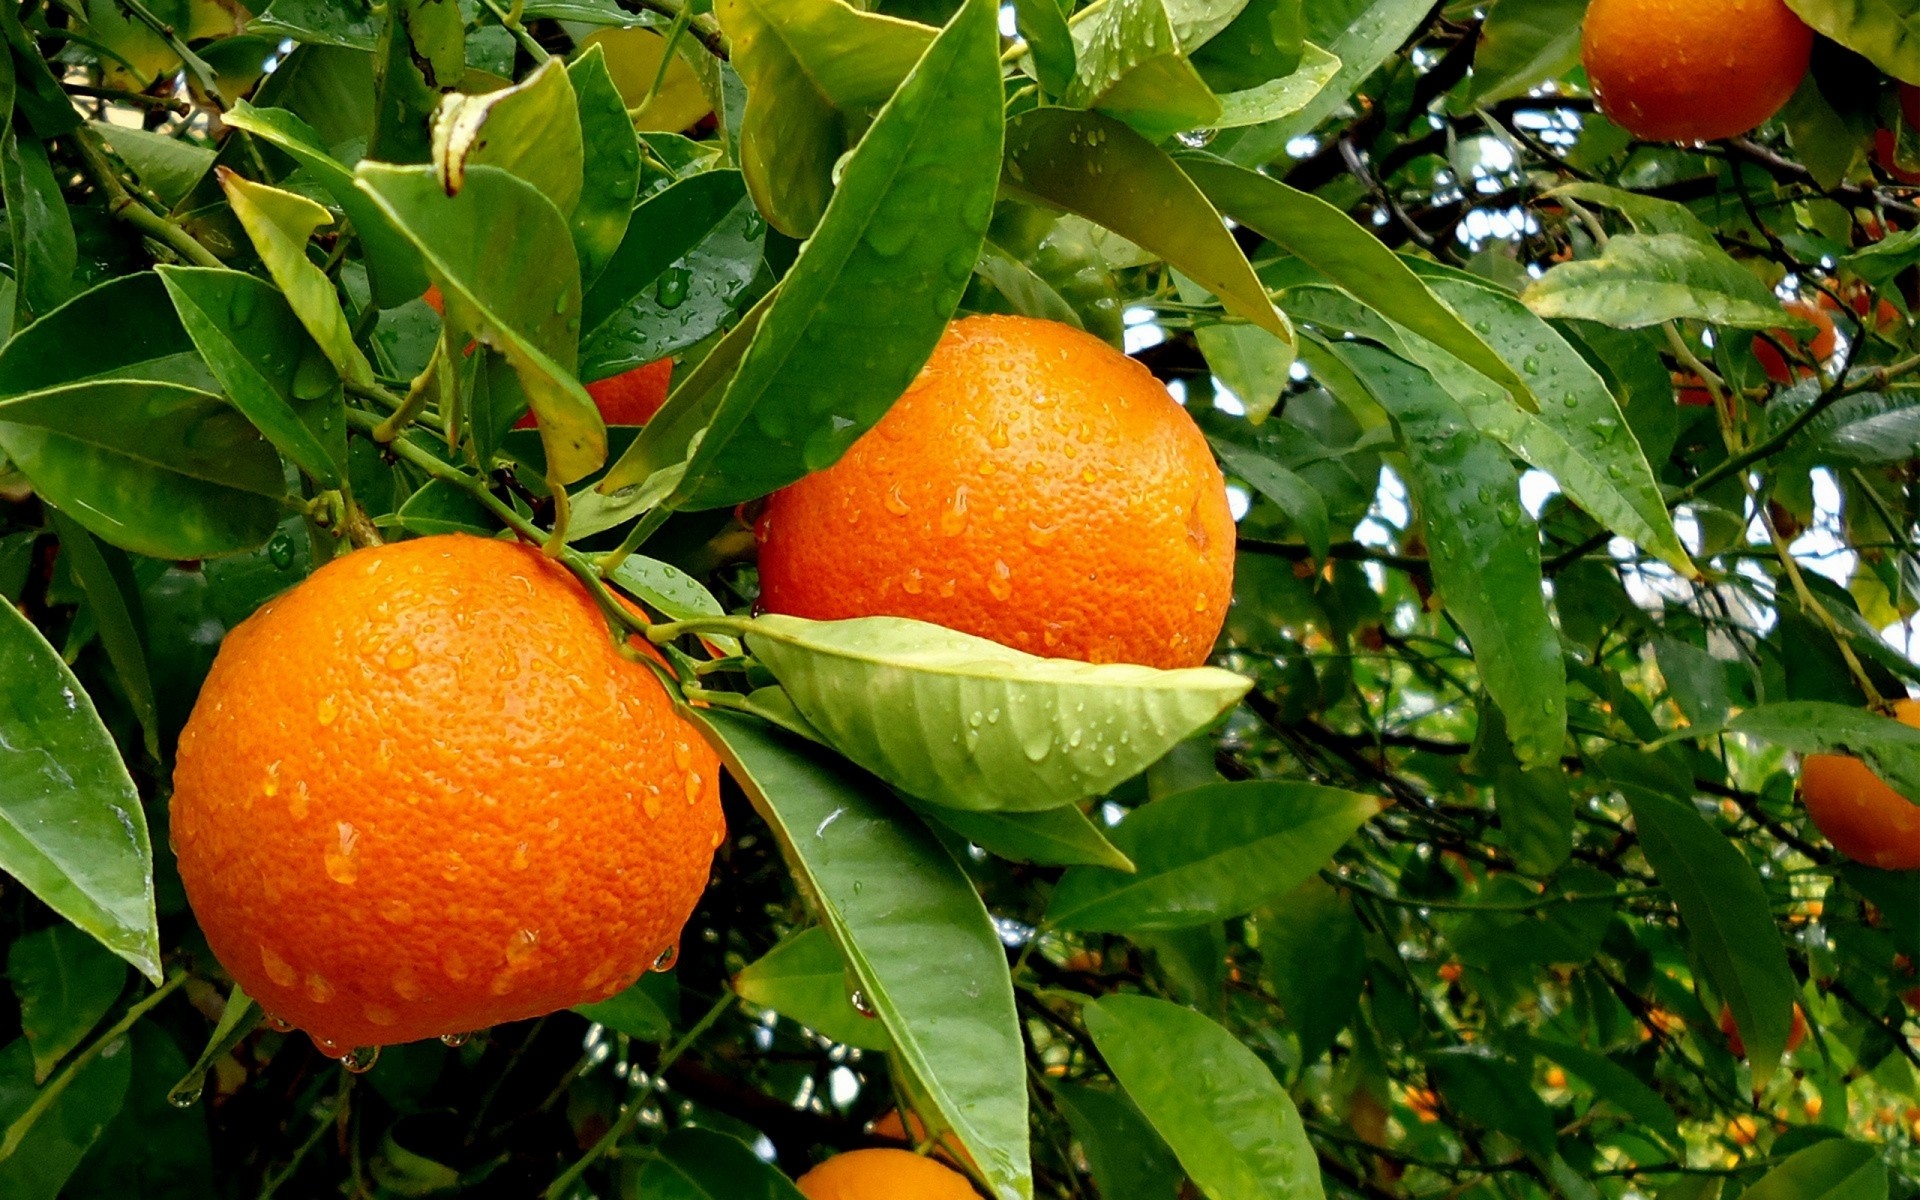 General 1920x1200 orange (fruit) fruit leaves plants water drops orange nature branch green closeup